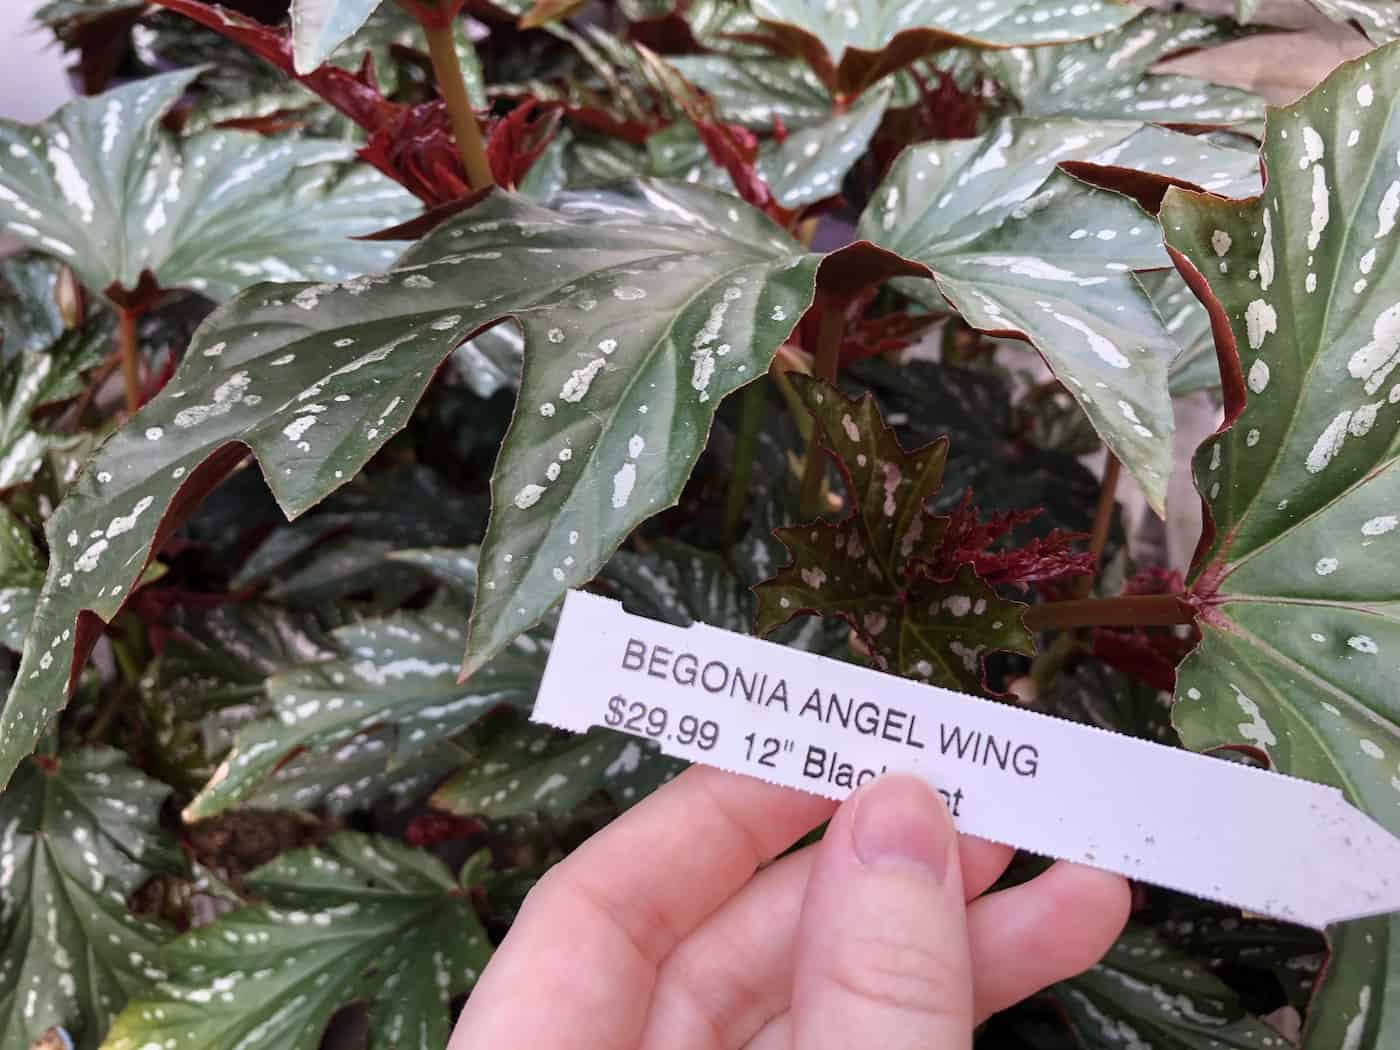 Begonia angel wing